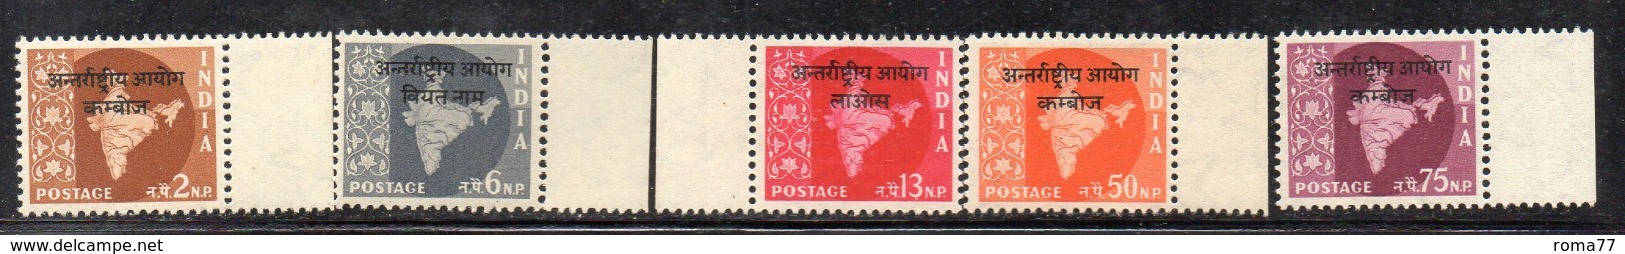 CI940 - INDIA 1957 , Franchigia Militare Yvert Serie N. 38/42 ***  MNH  (2380A)  Vietnam - Military Service Stamp